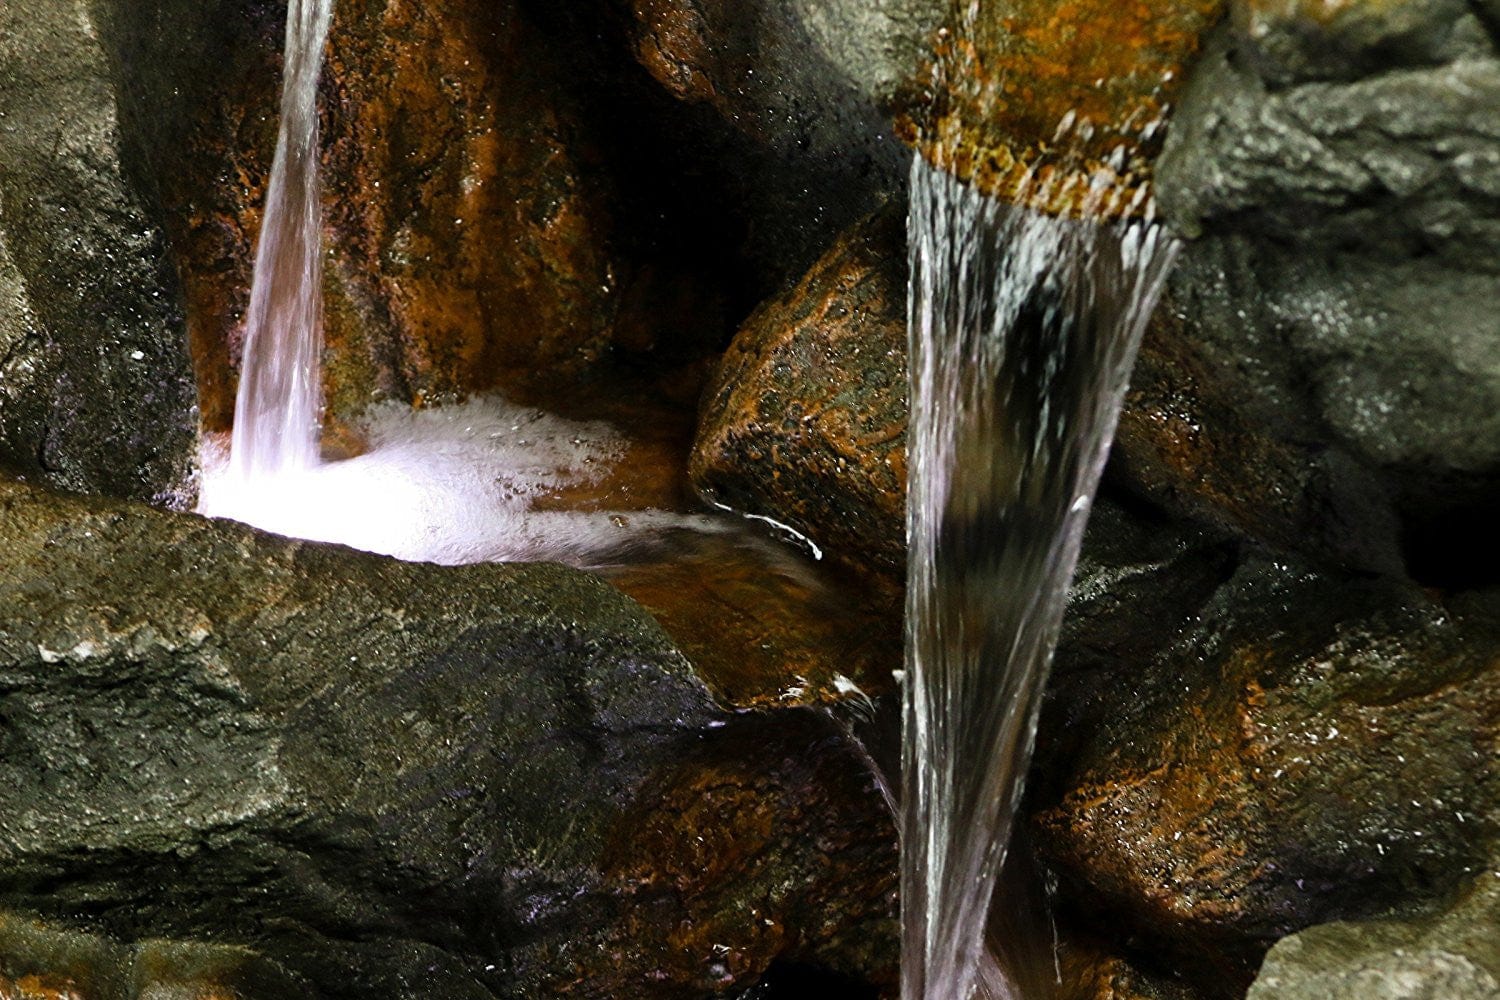 Tall Rainforest Waterfall Fountain LED Lights - Outdoor Art Pros